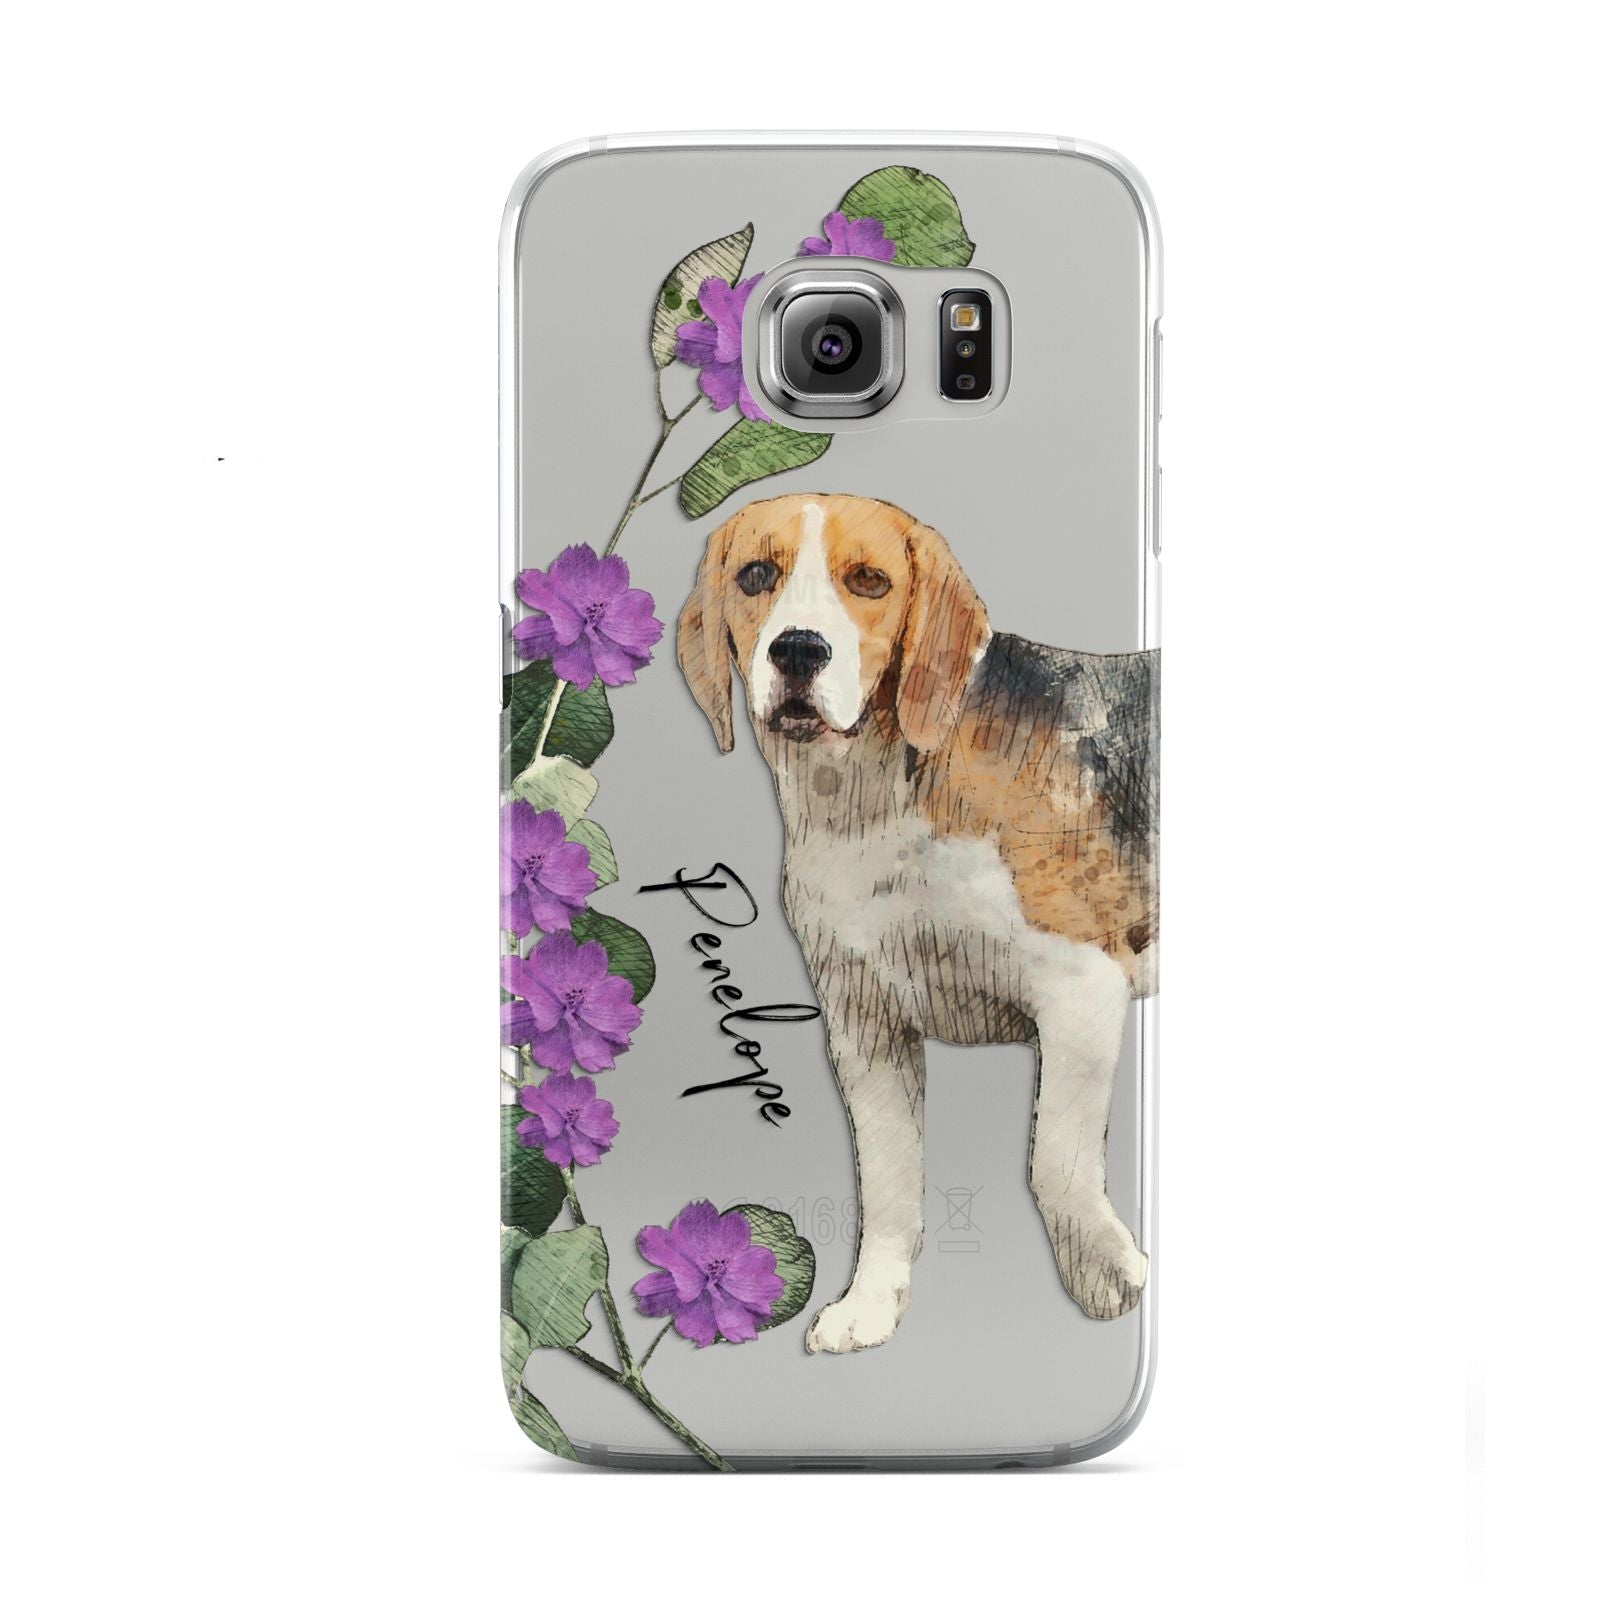 Personalised Dog Samsung Galaxy S6 Case